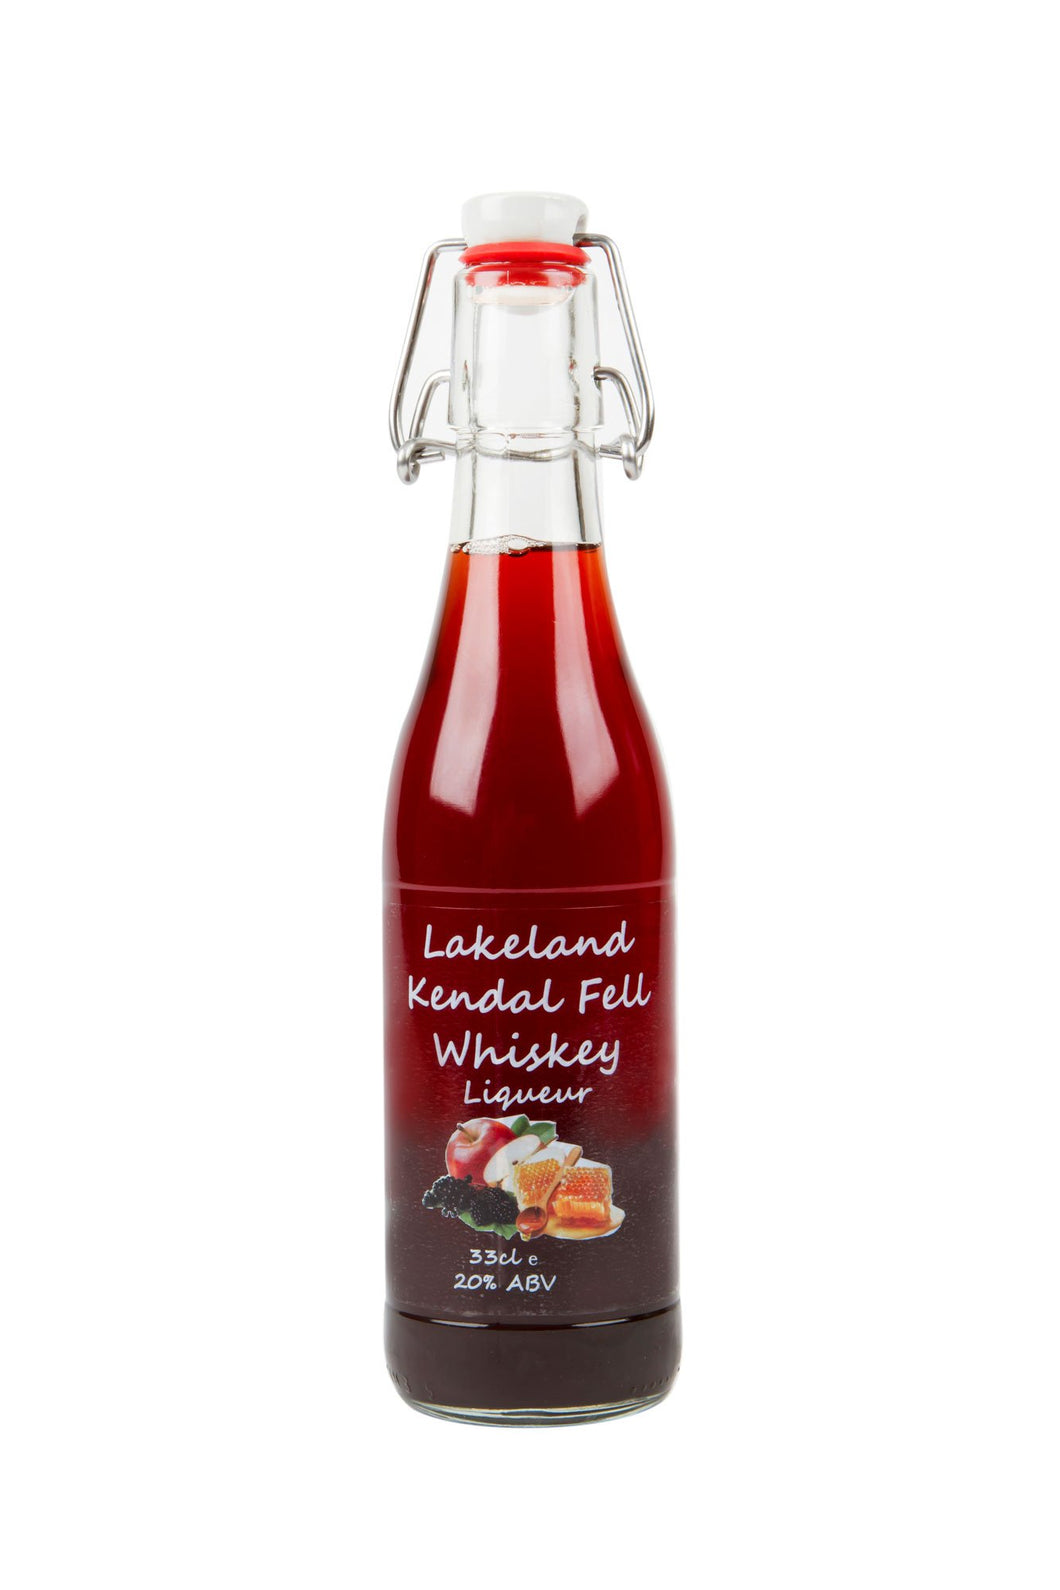 Lakeland Kendal Fell Whisky Liqueur